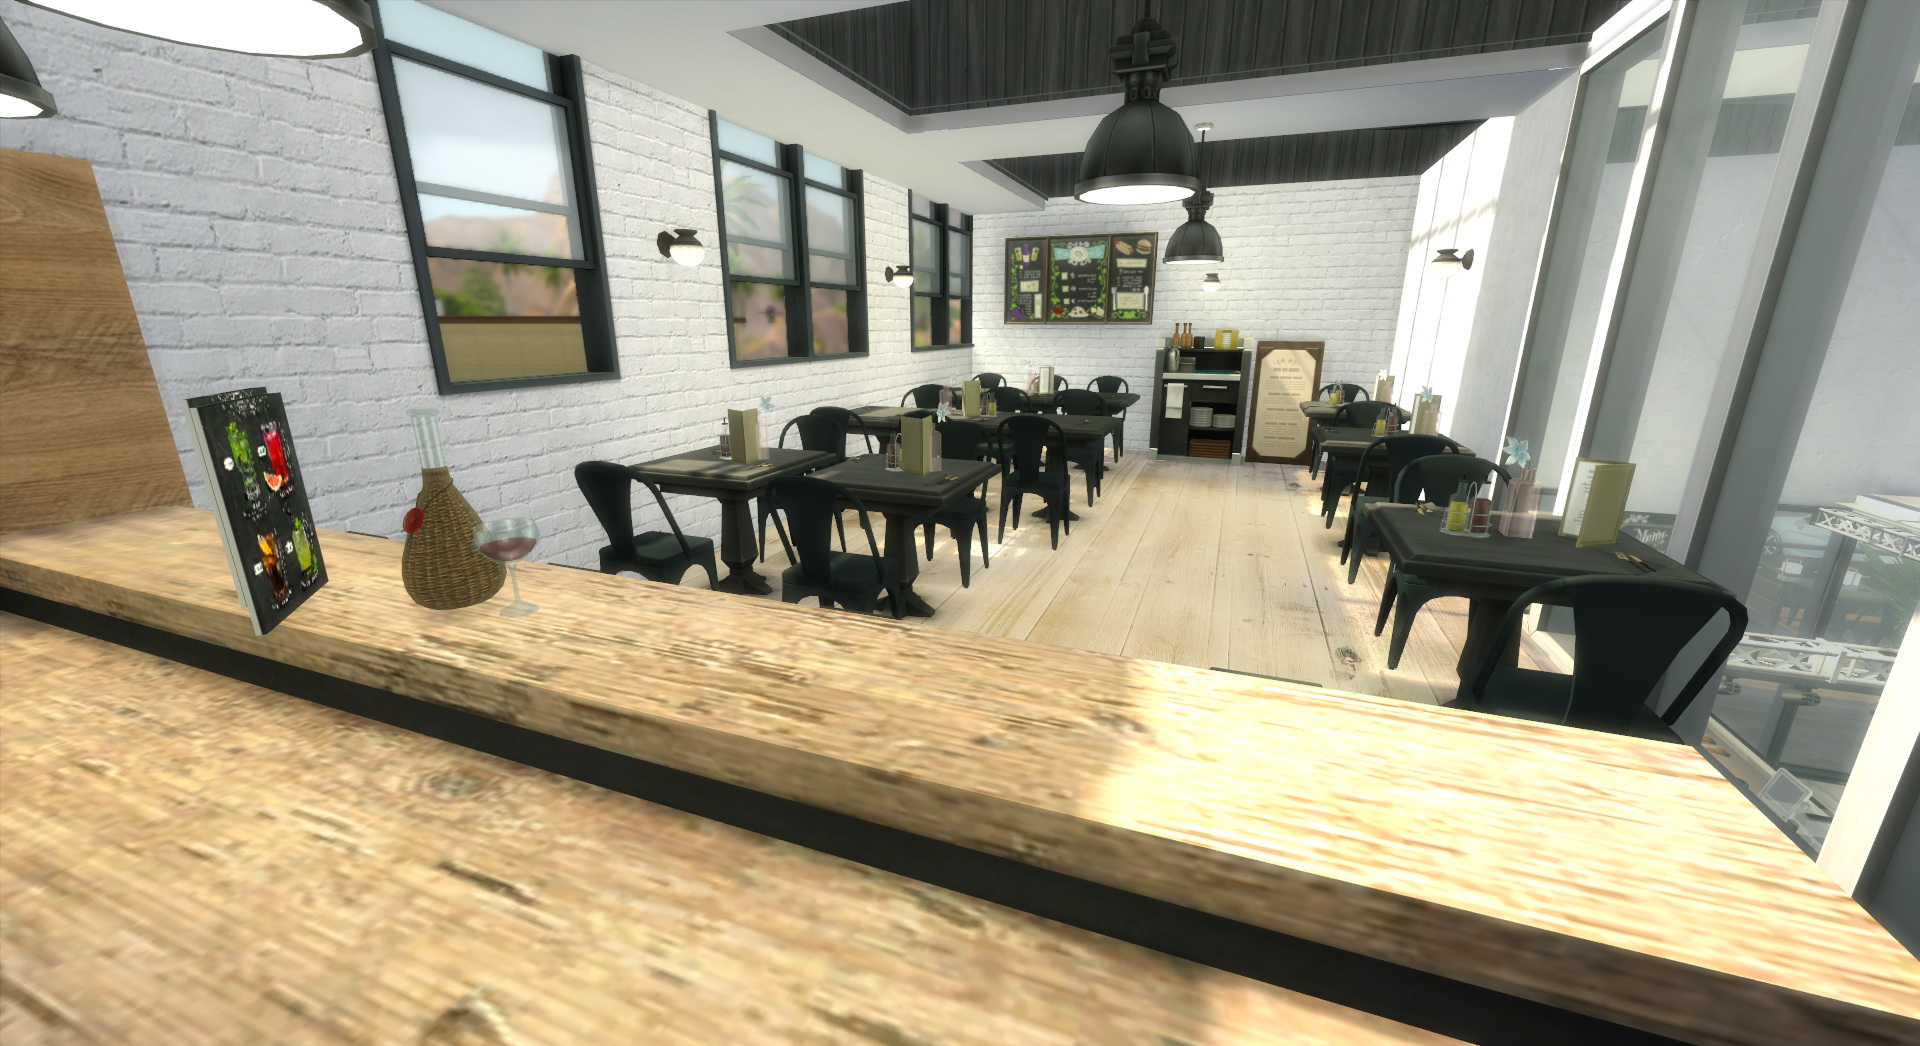 Restaurant kitchen workshop by Solene Espana from Luniversims • Sims 4